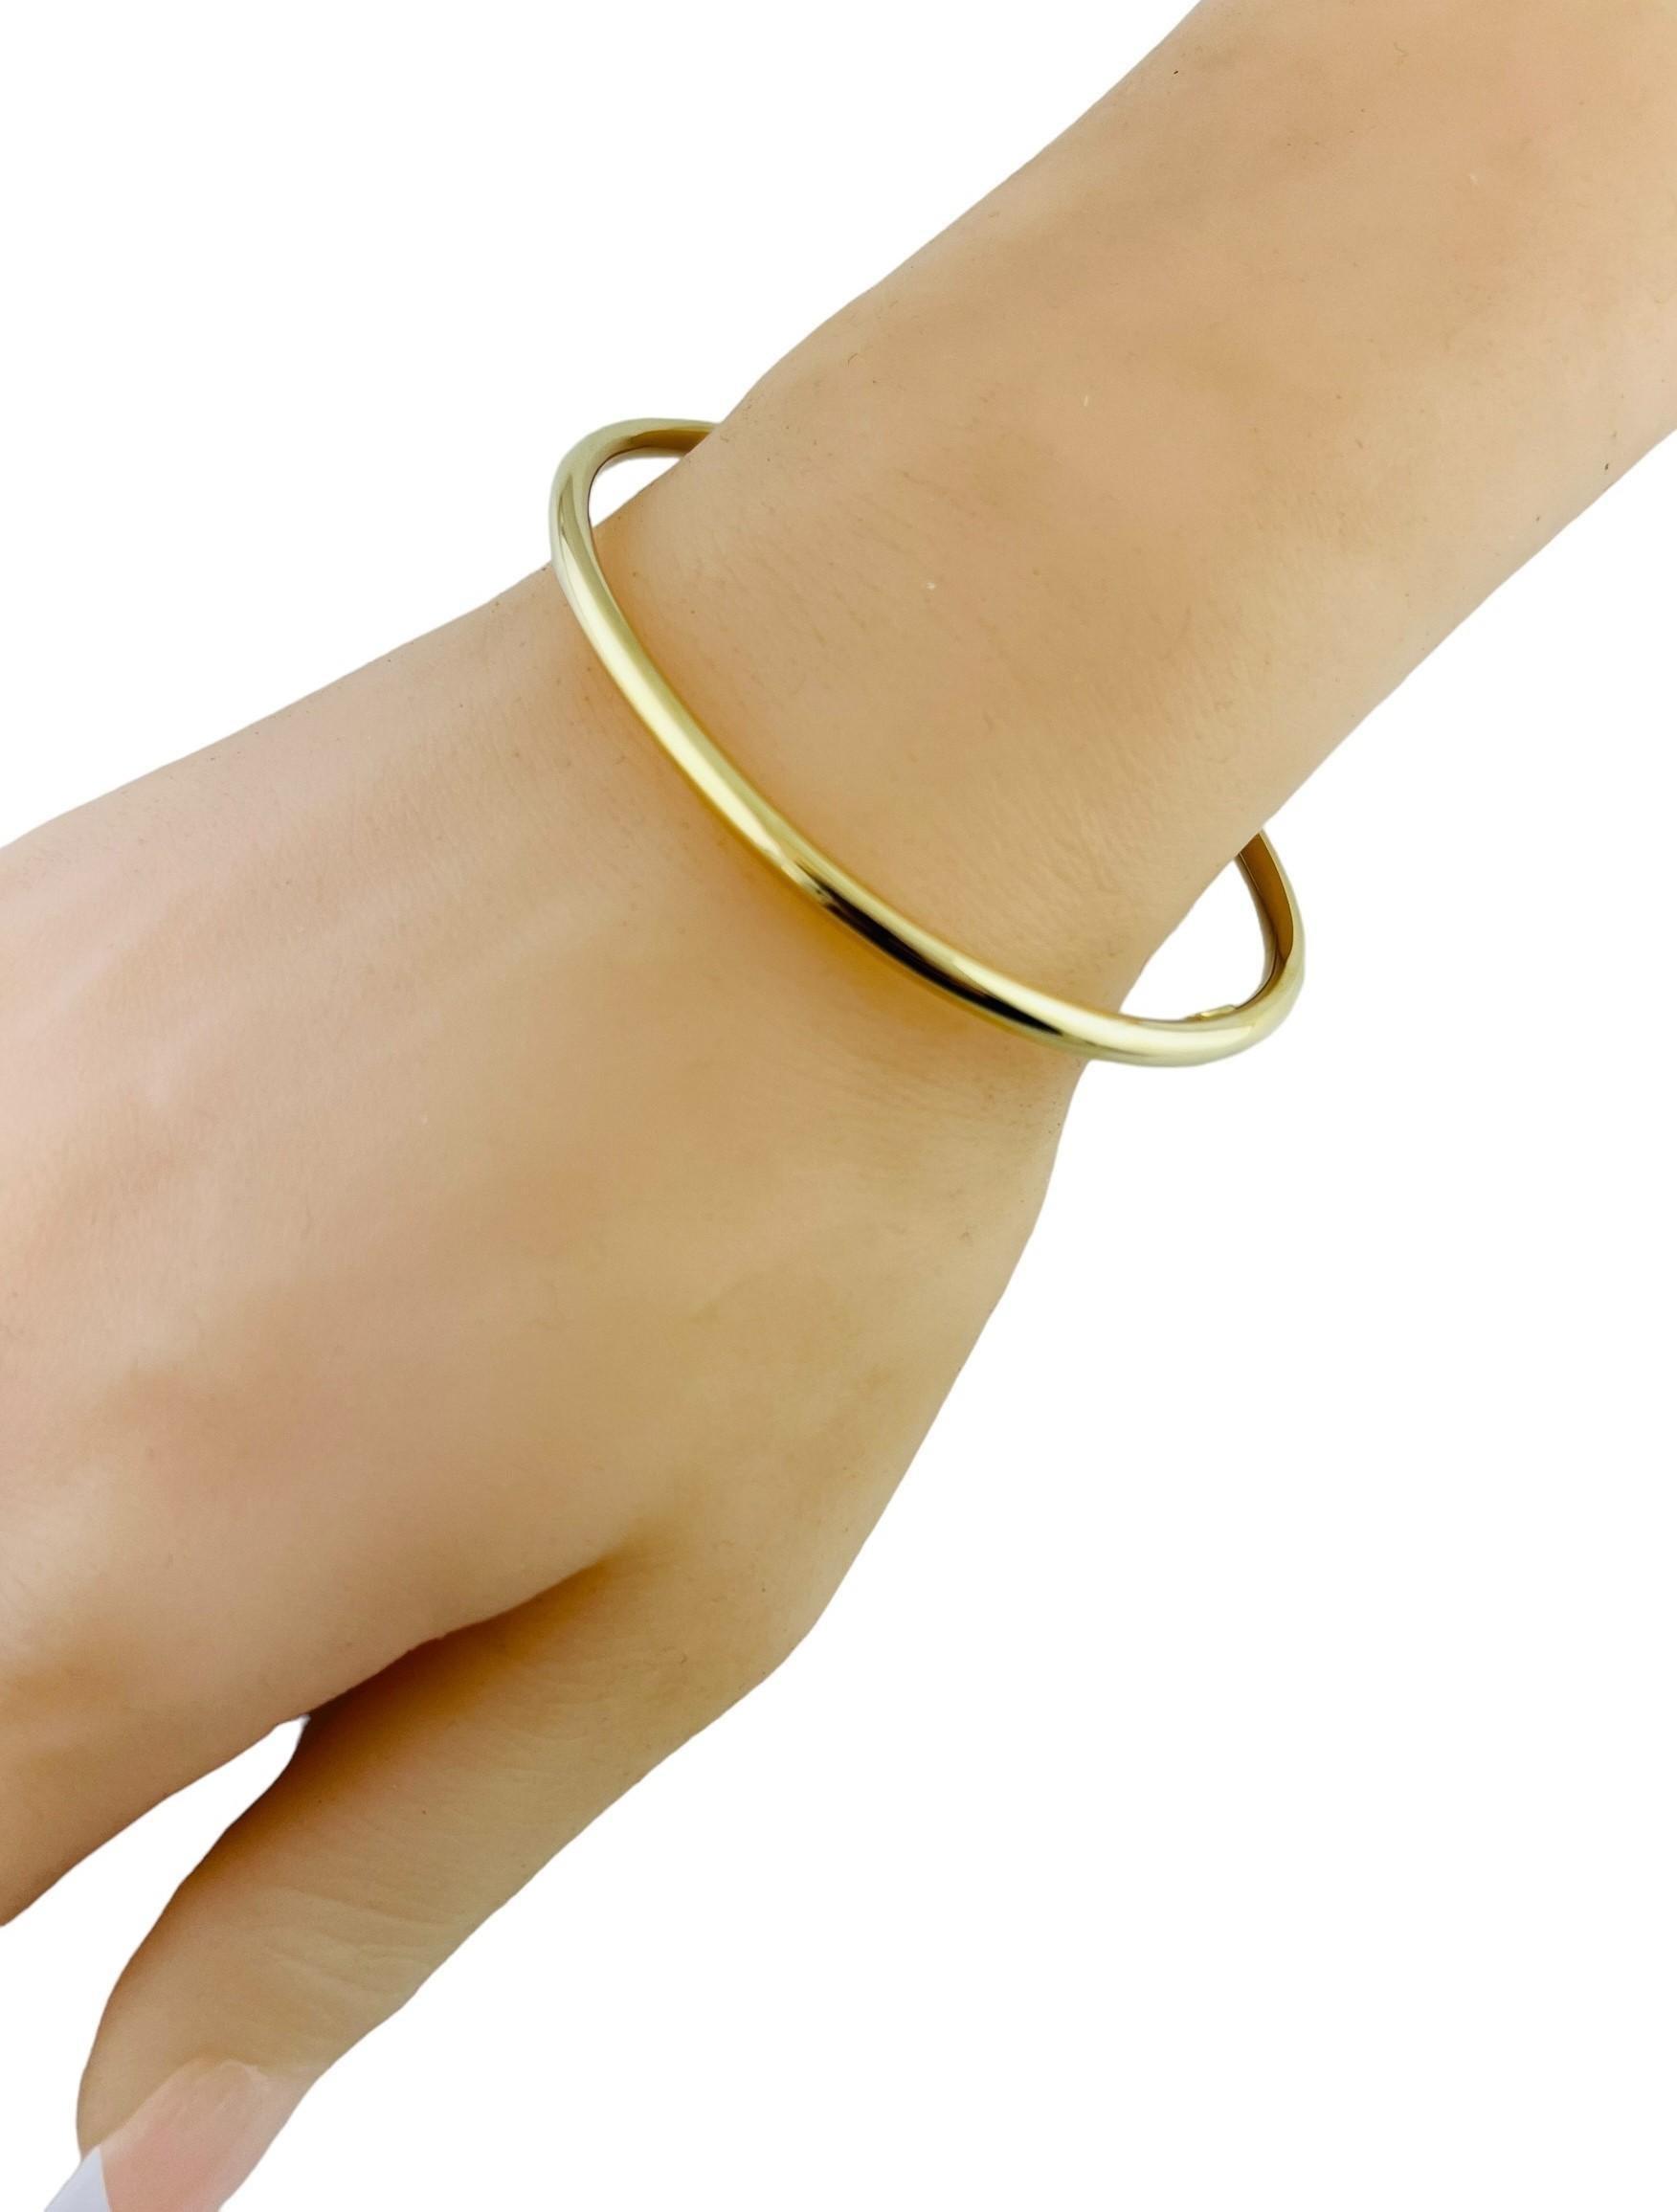 Tiffany & Co. 18K Yellow Gold Oval Bangle Bracelet #16680 6